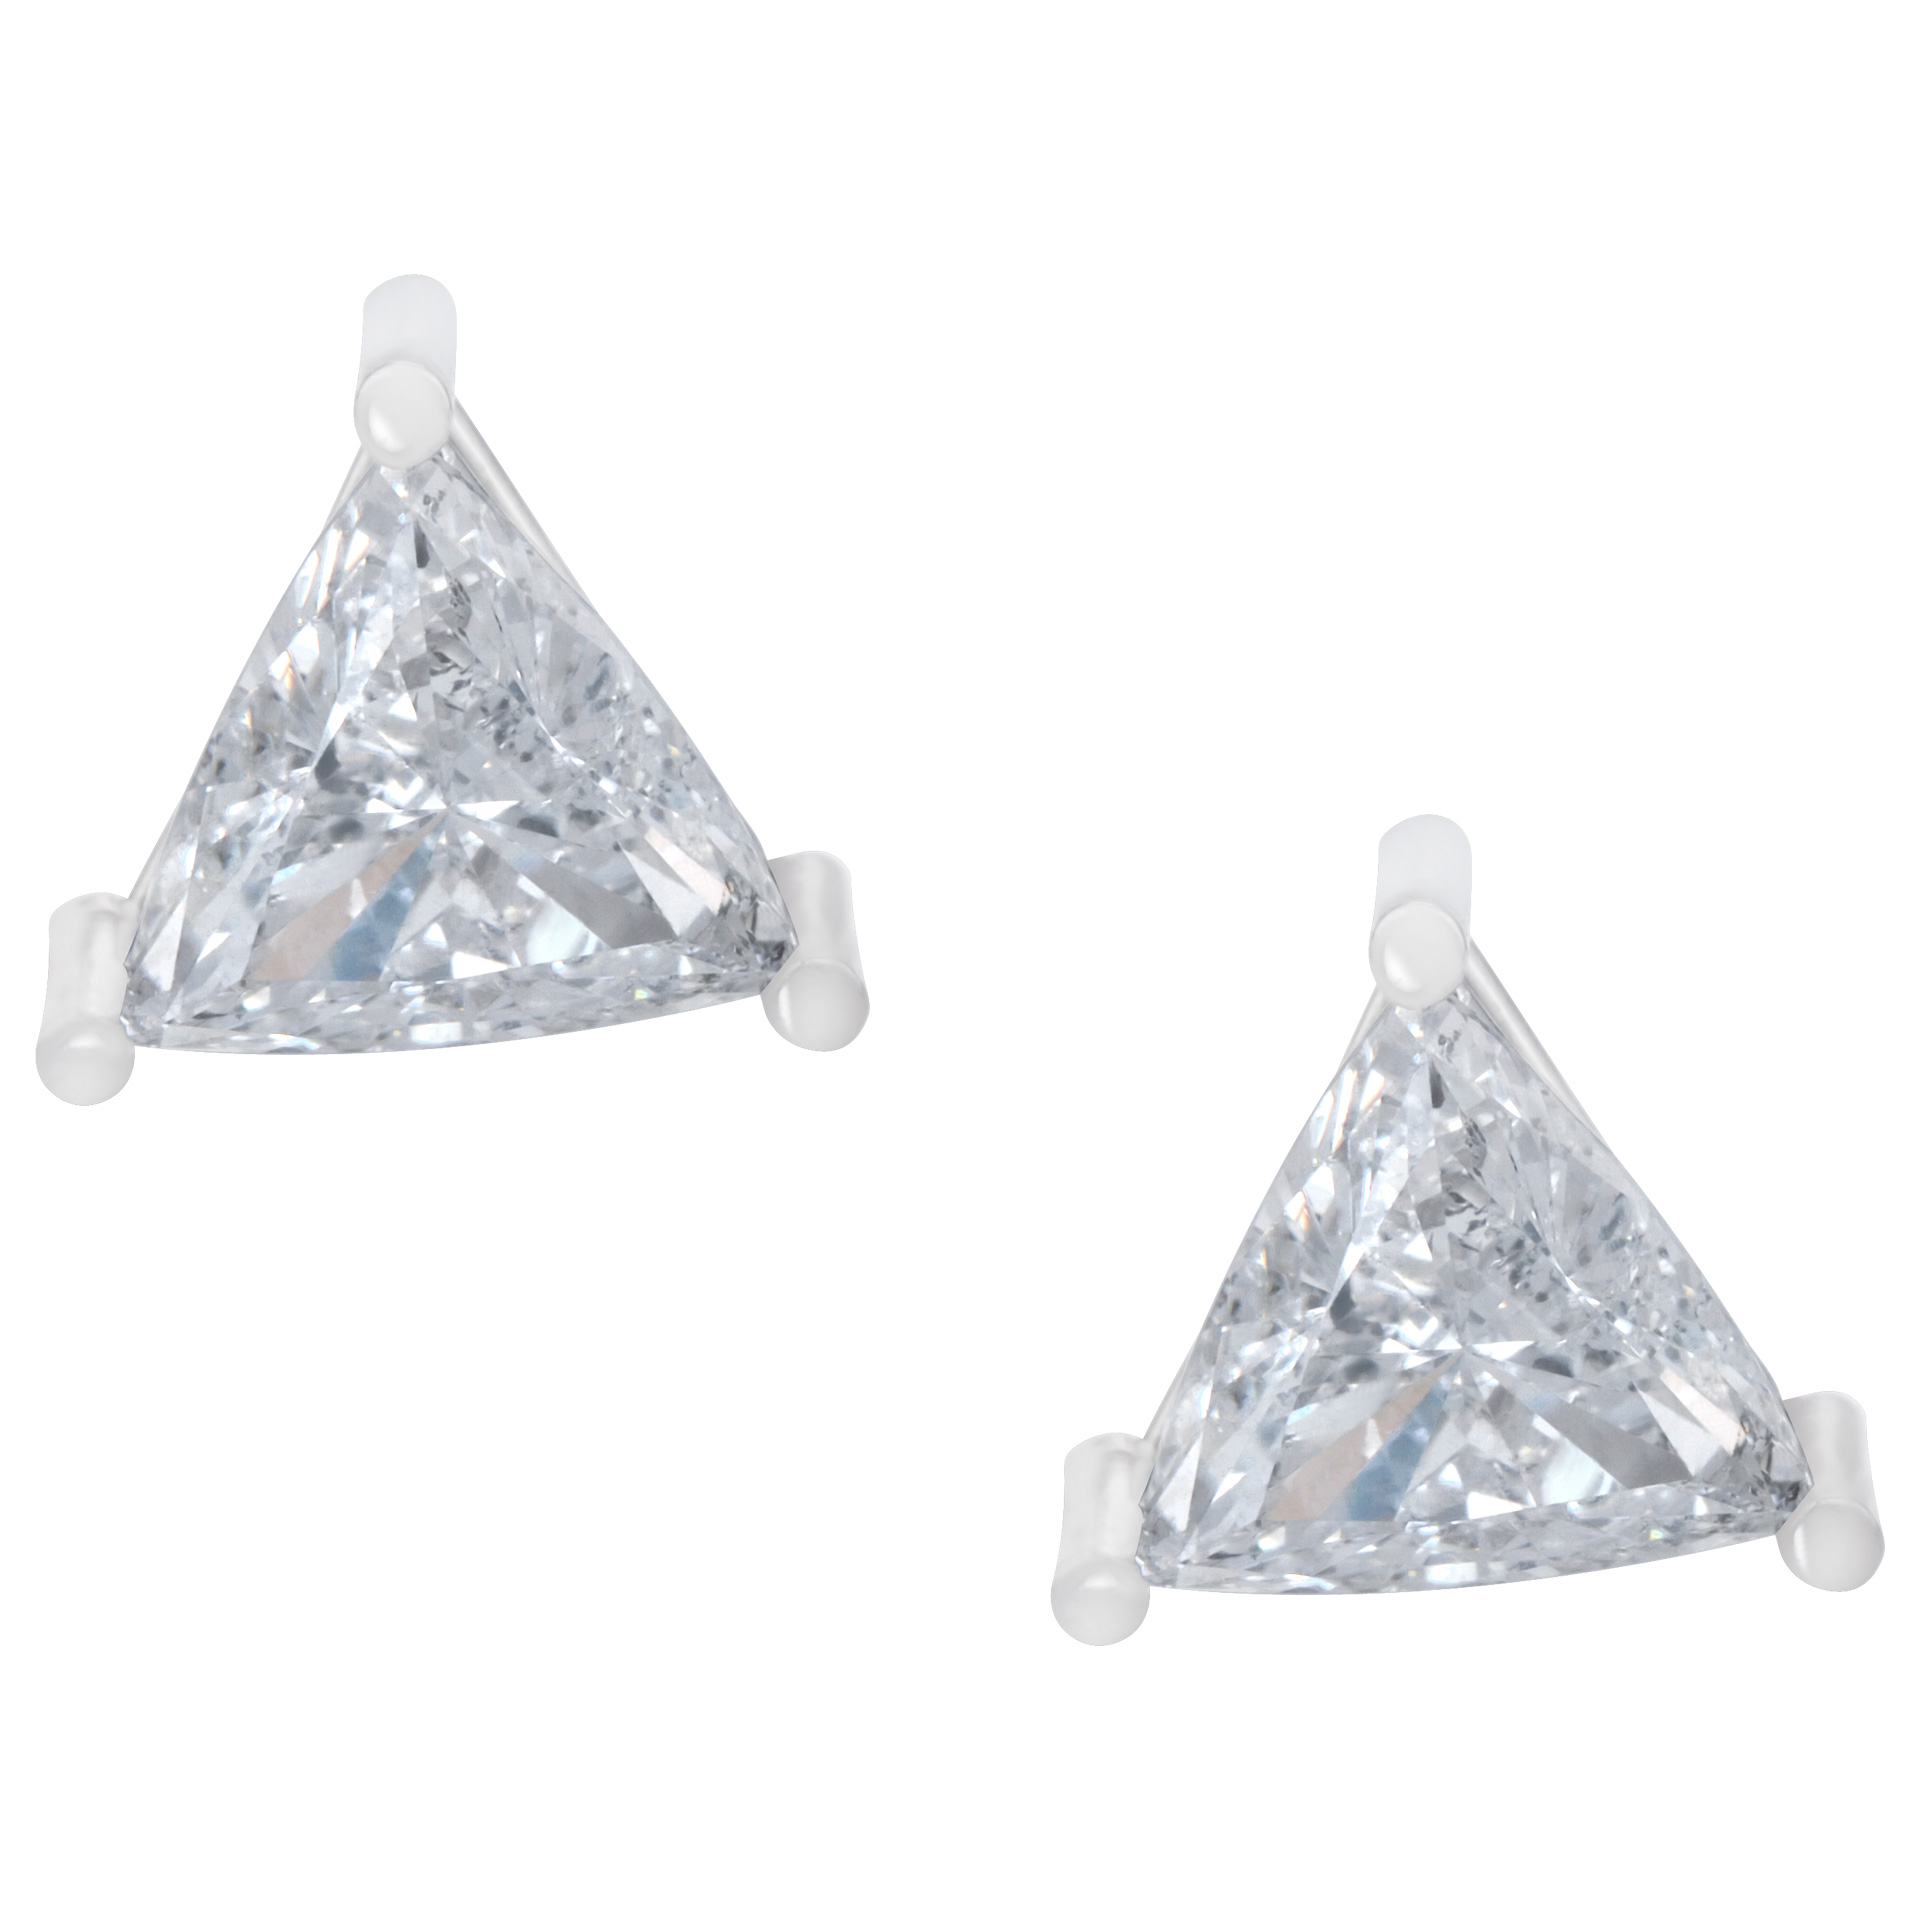 Trilliant diamond studs in 14k white gold image 1